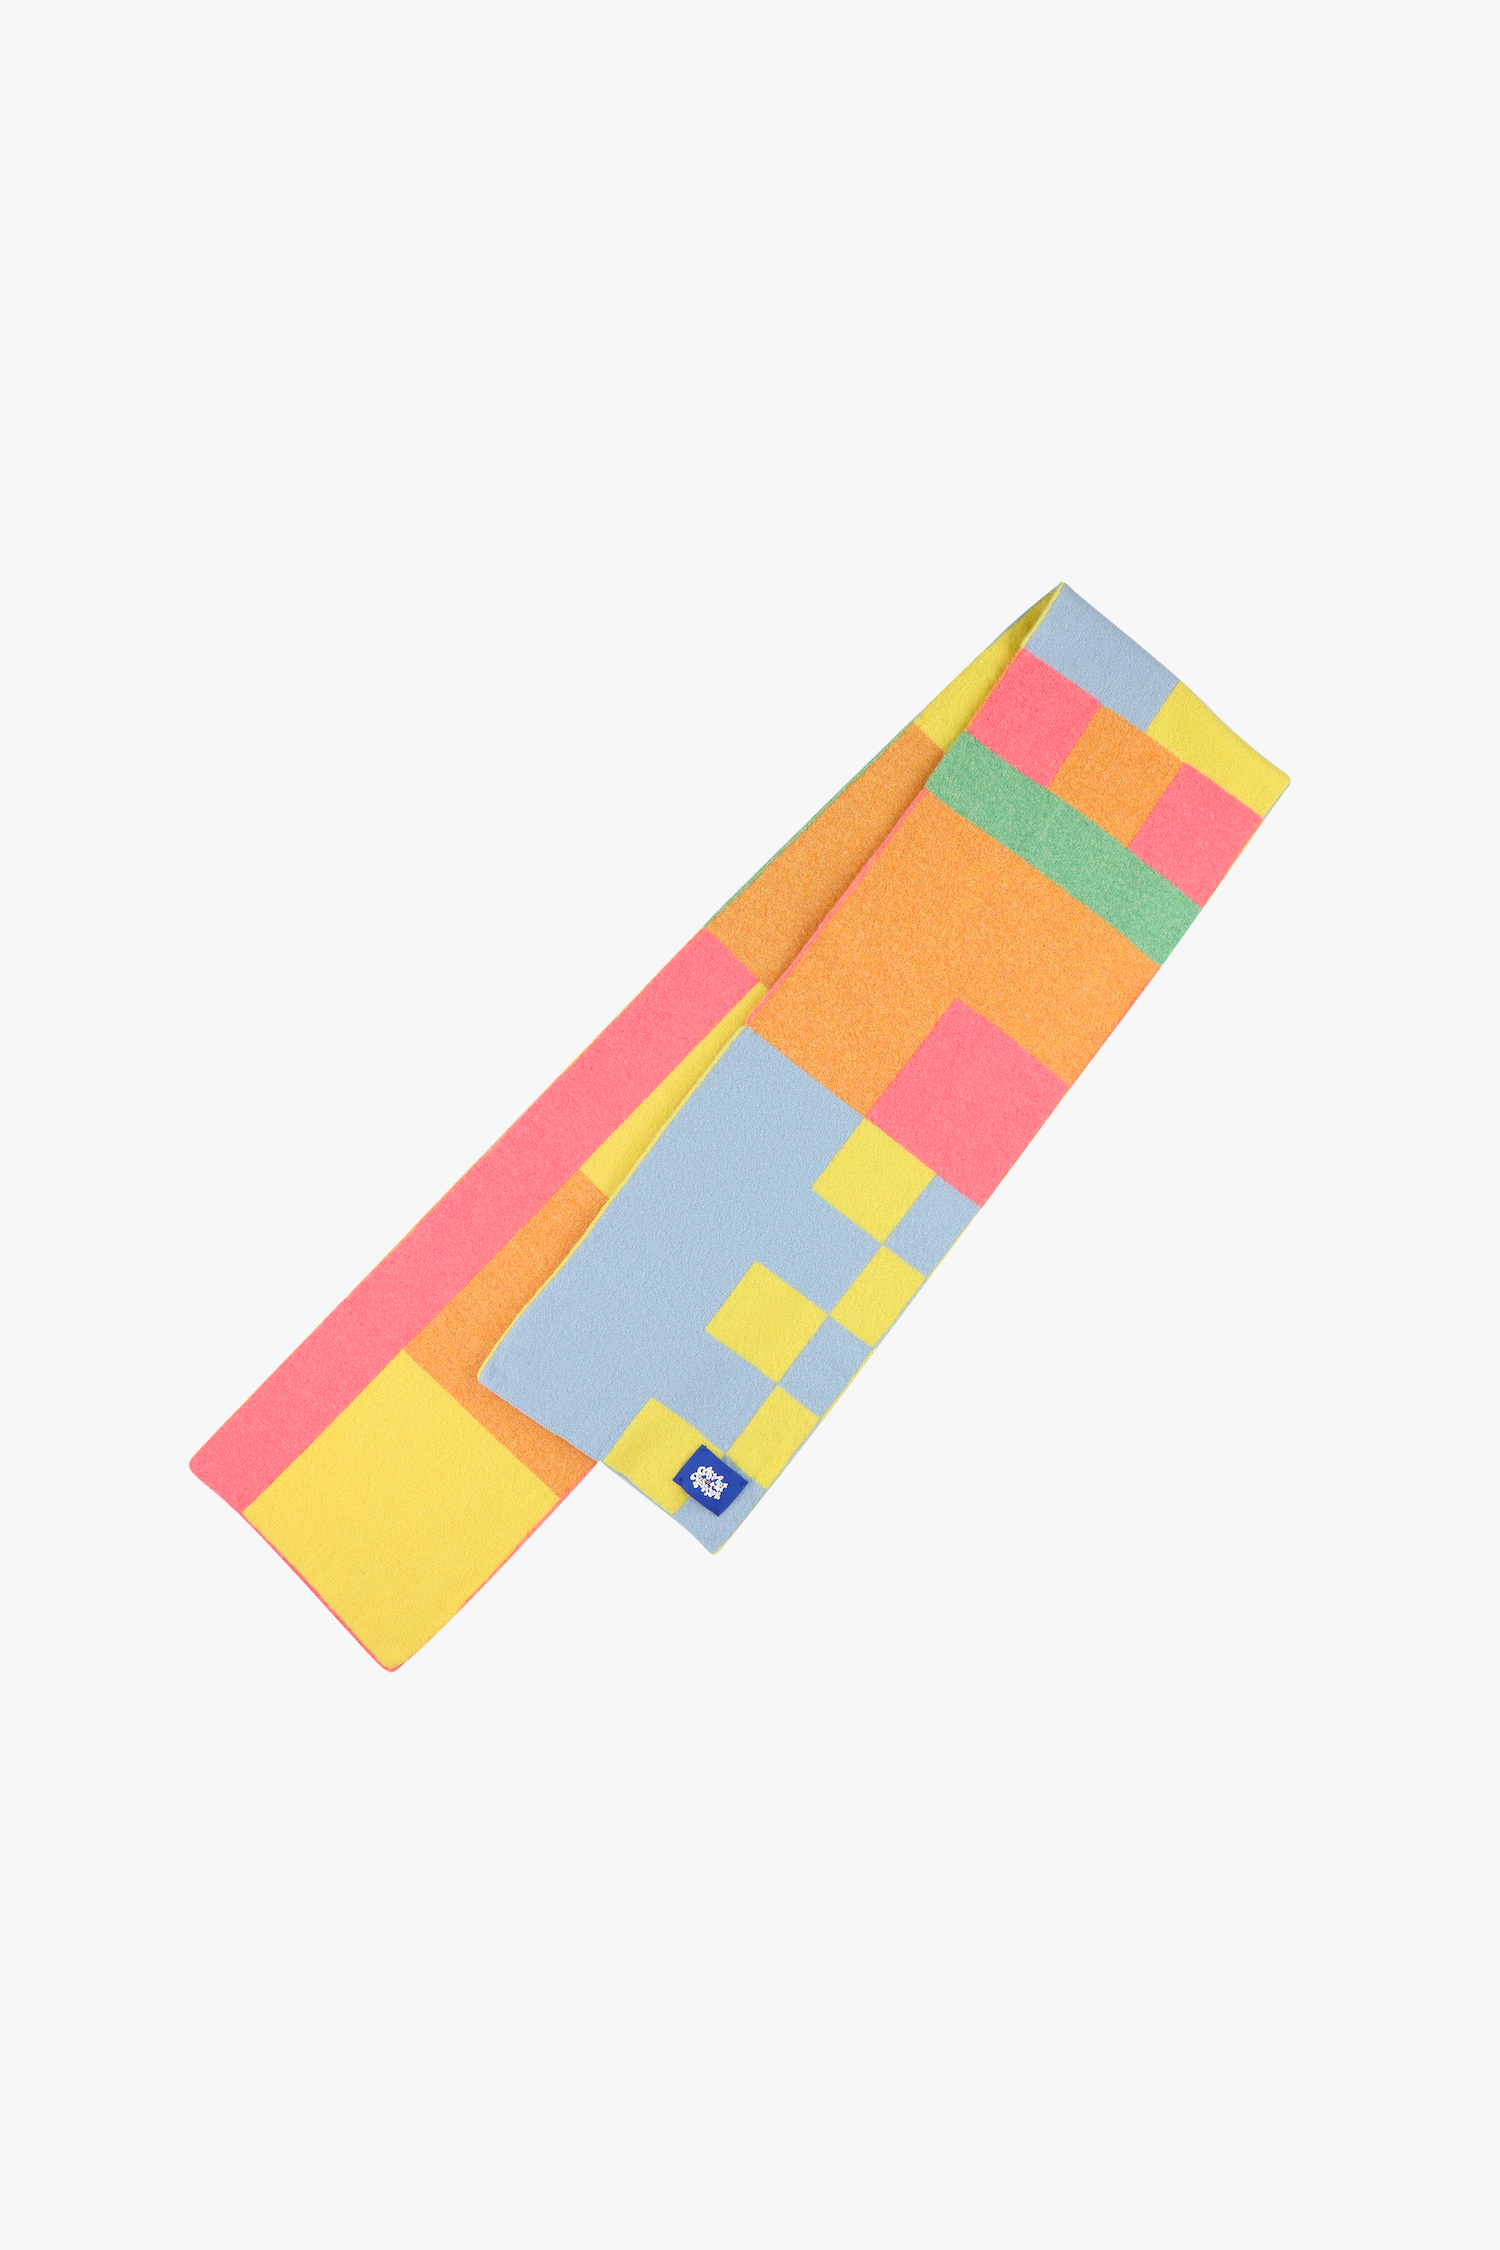 Willy Wonka scarf - pastel